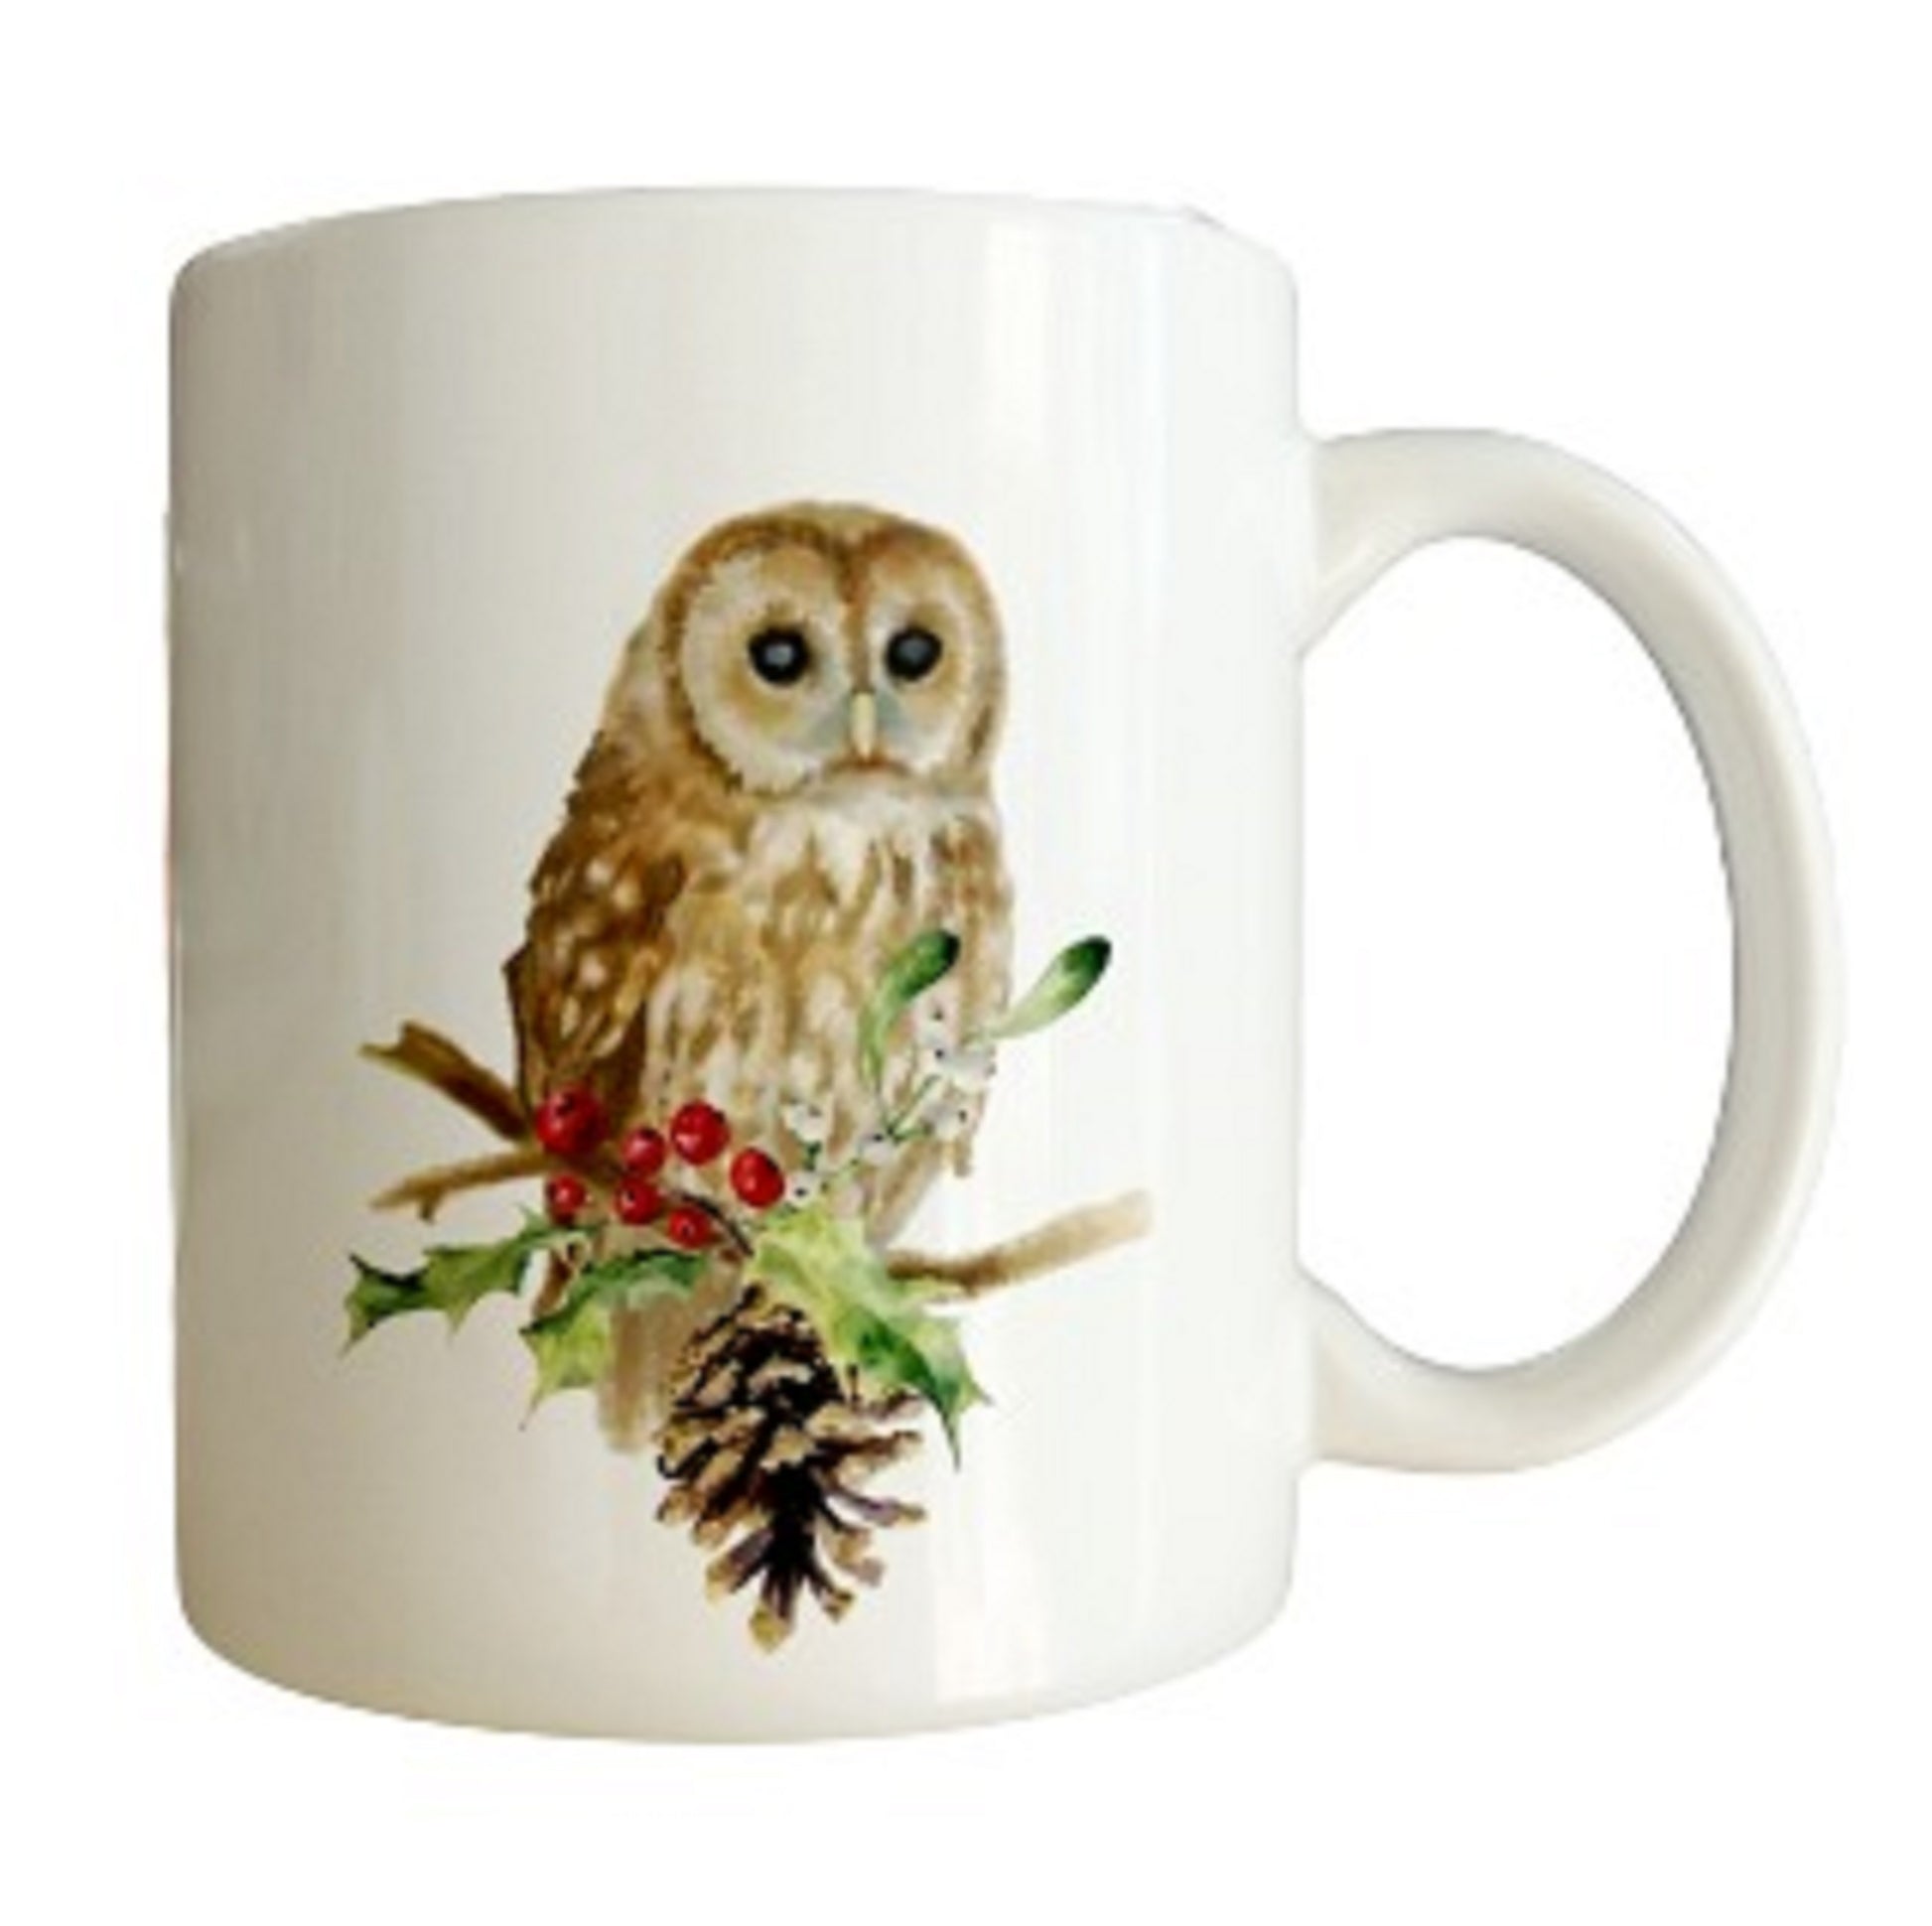  Christmas Owl With Holly Mug by Free Spirit Accessories sold by Free Spirit Accessories